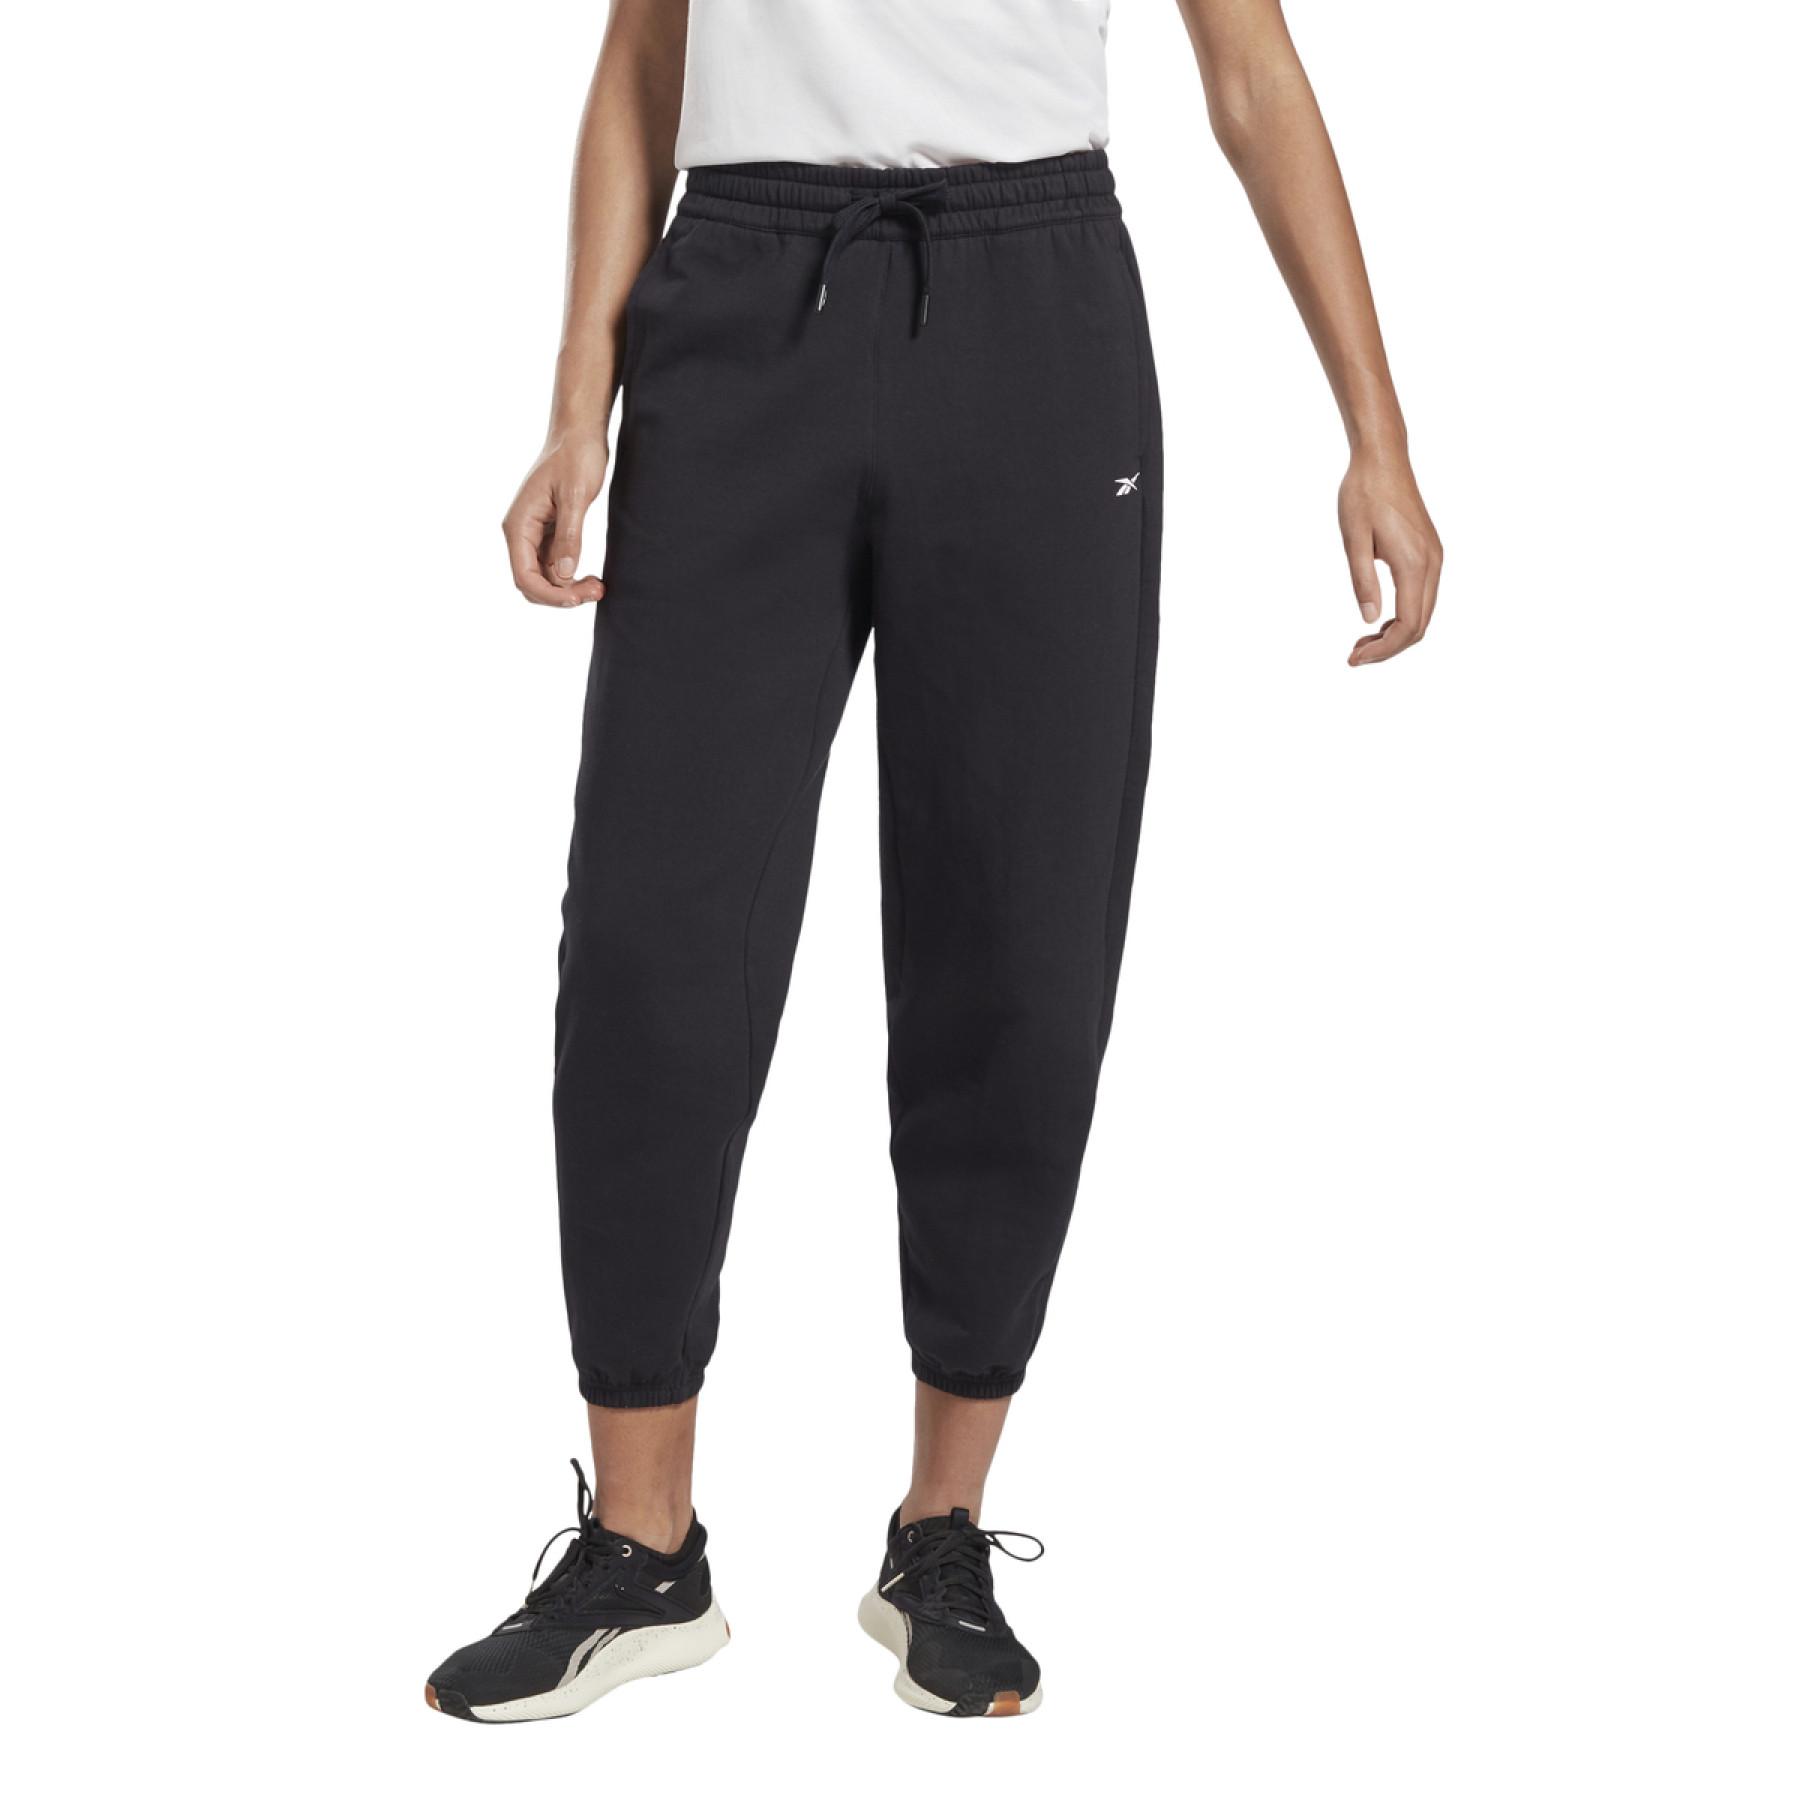 Women's trousers Reebok DreamBlend Cotton Knit - Trousers and leggings -  Women's textiles - Running